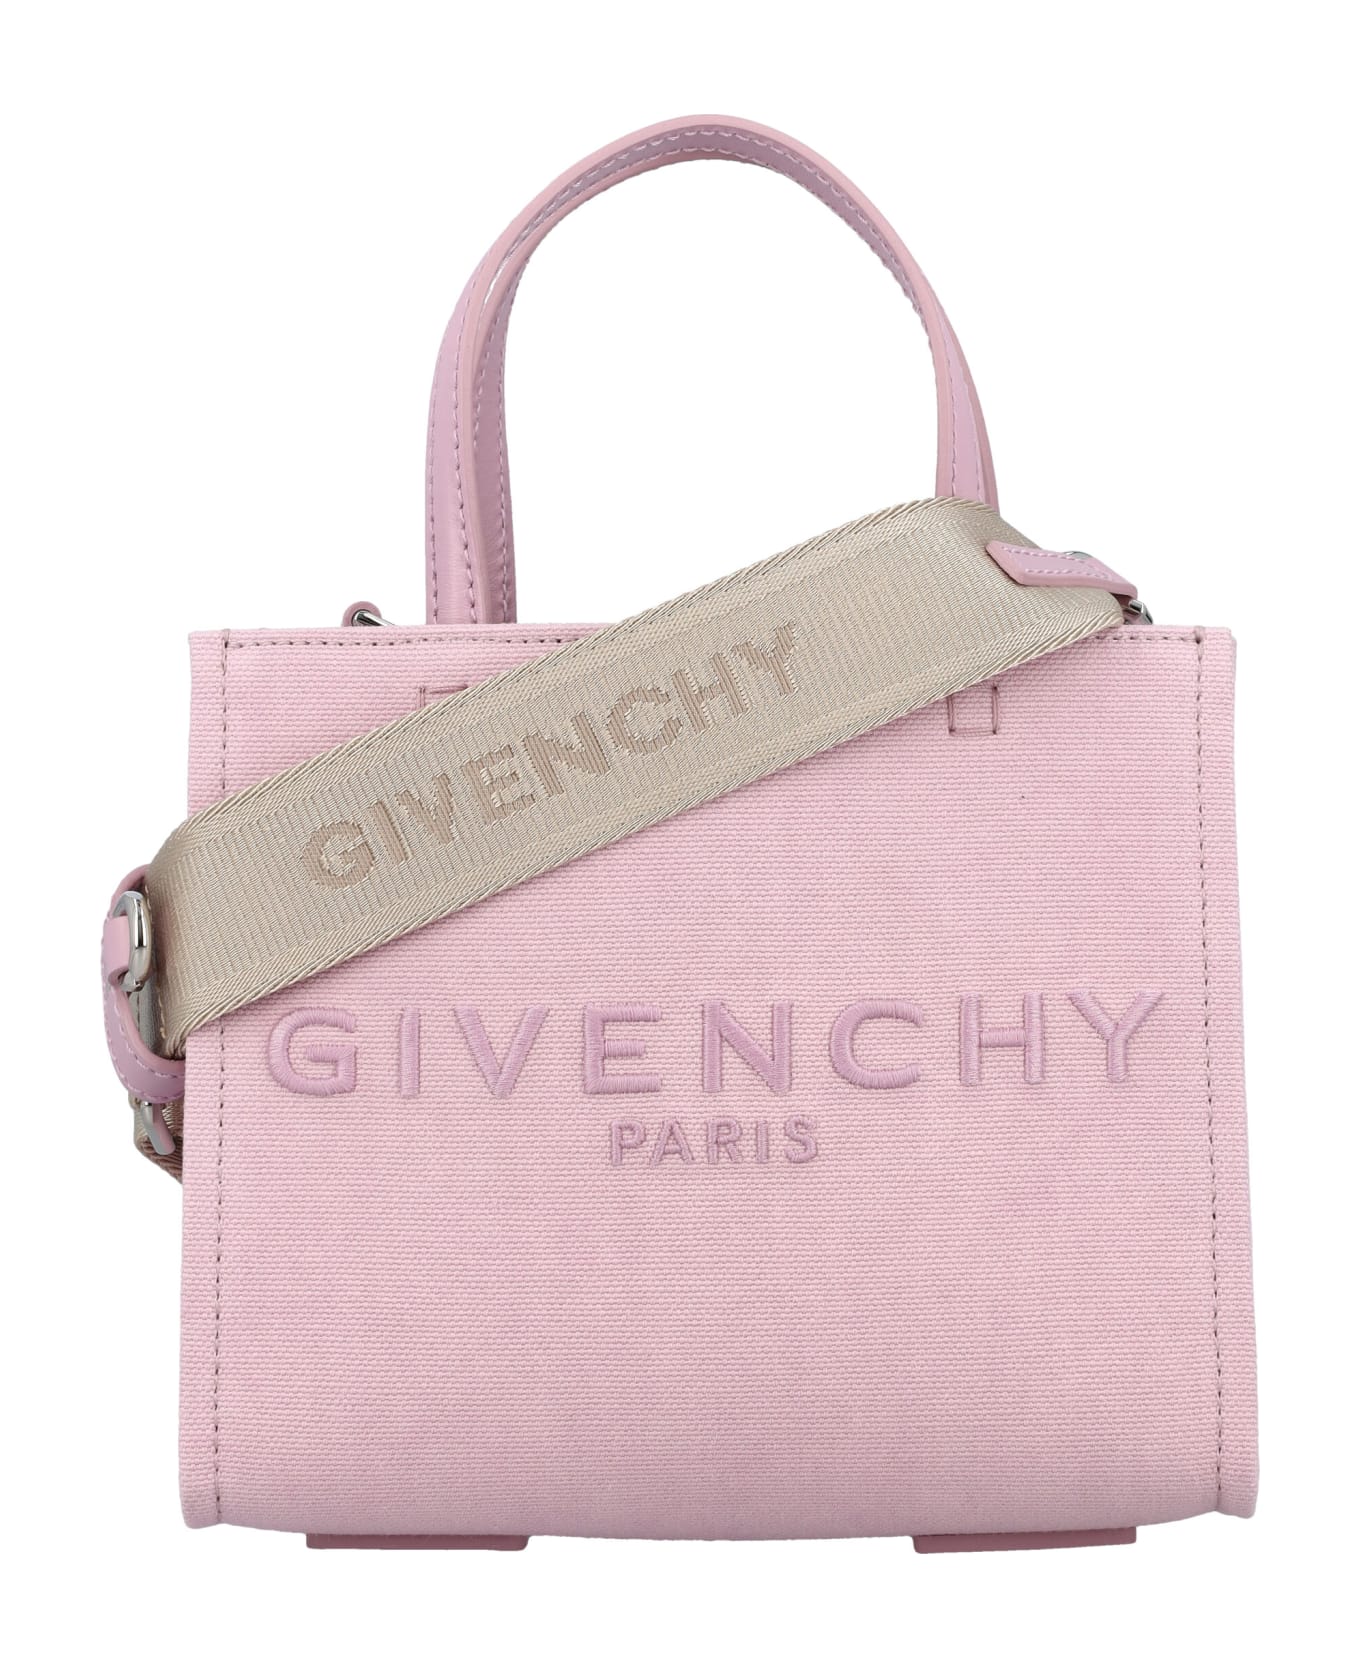 Givenchy G-tote Mini Tote Bag - OLD PINK